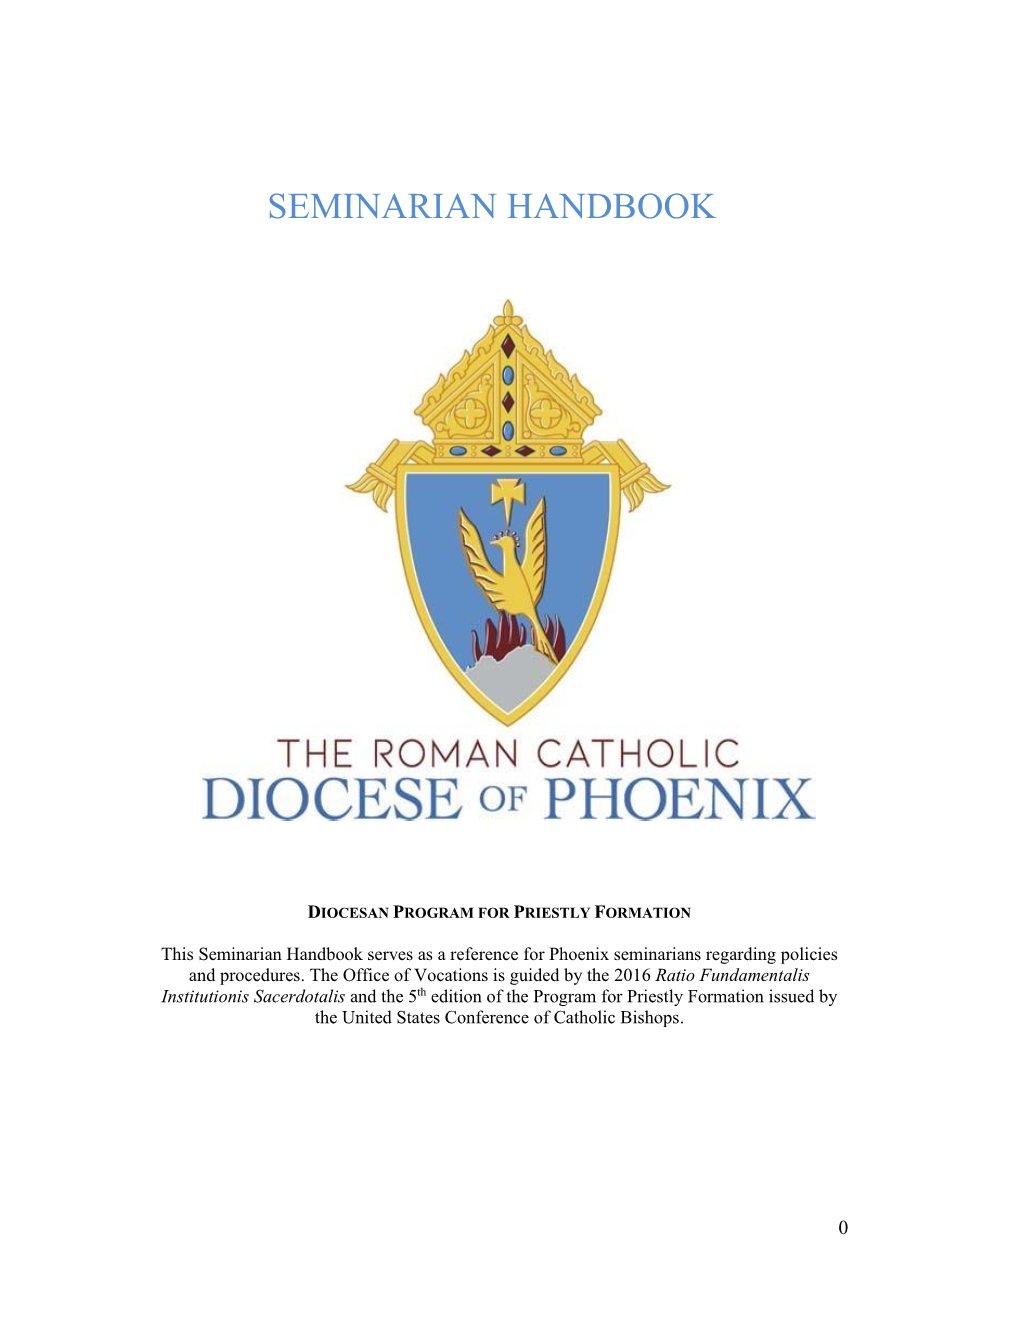 Phoenix Seminarian Handbook